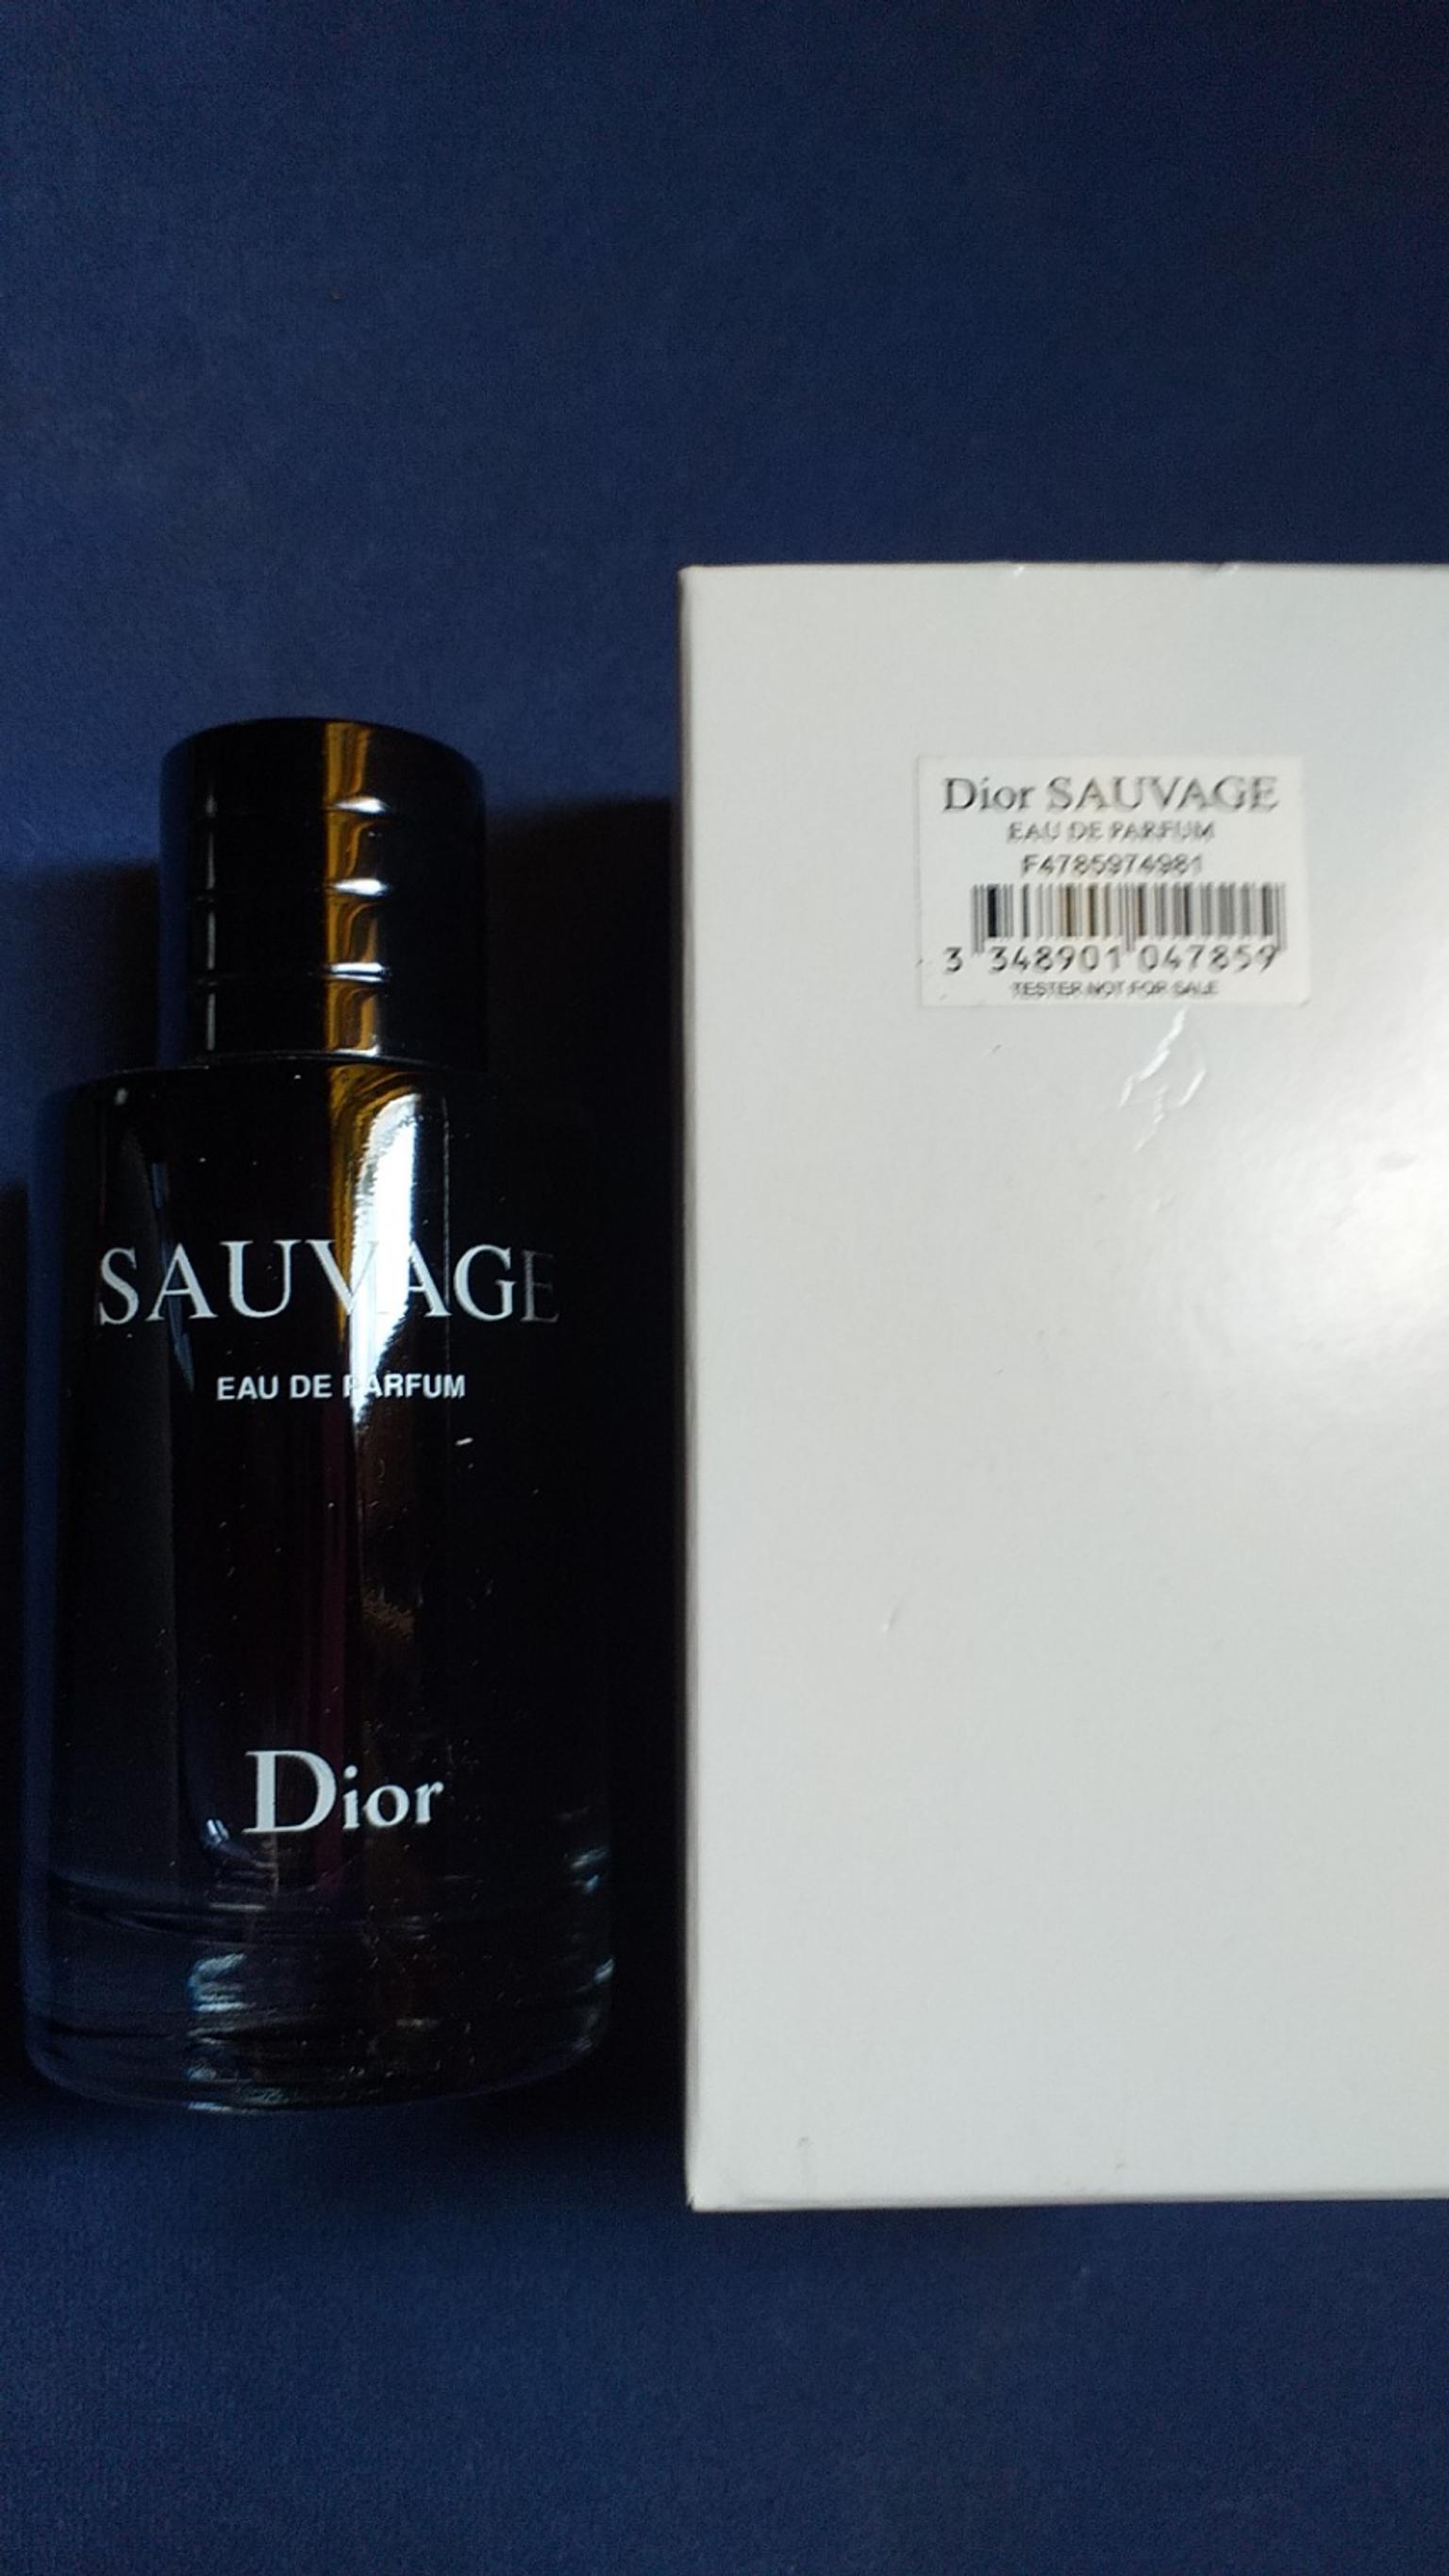 Dior Sauvage Eu De Parfum 100ml In 22117 Billstedt For 45 00 For Sale Shpock